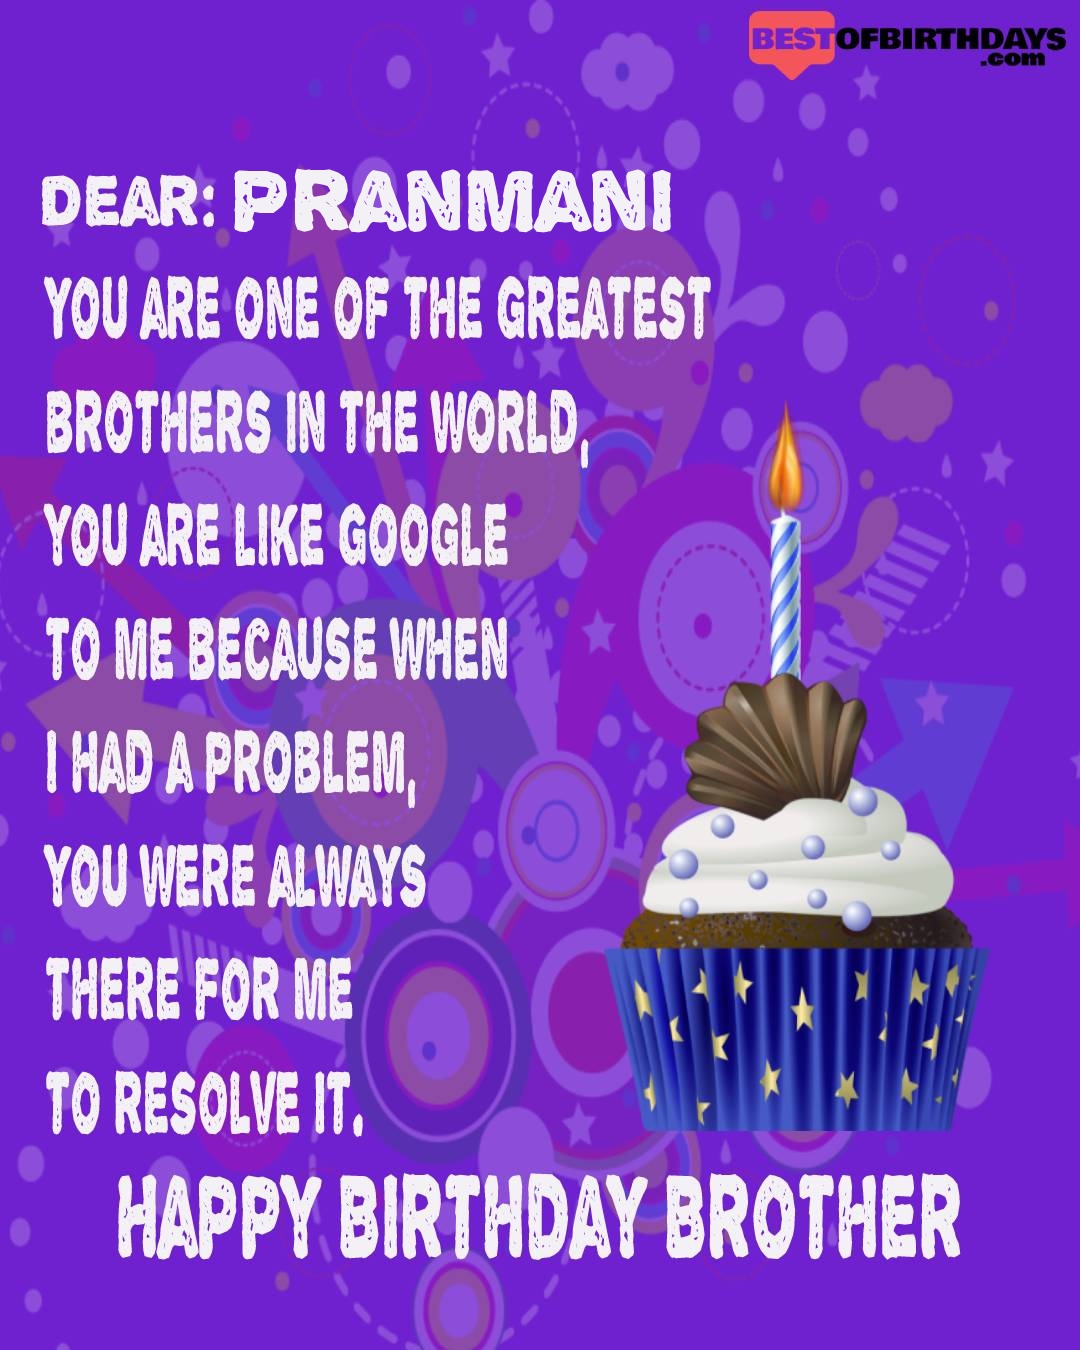 Happy birthday pranmani bhai brother bro